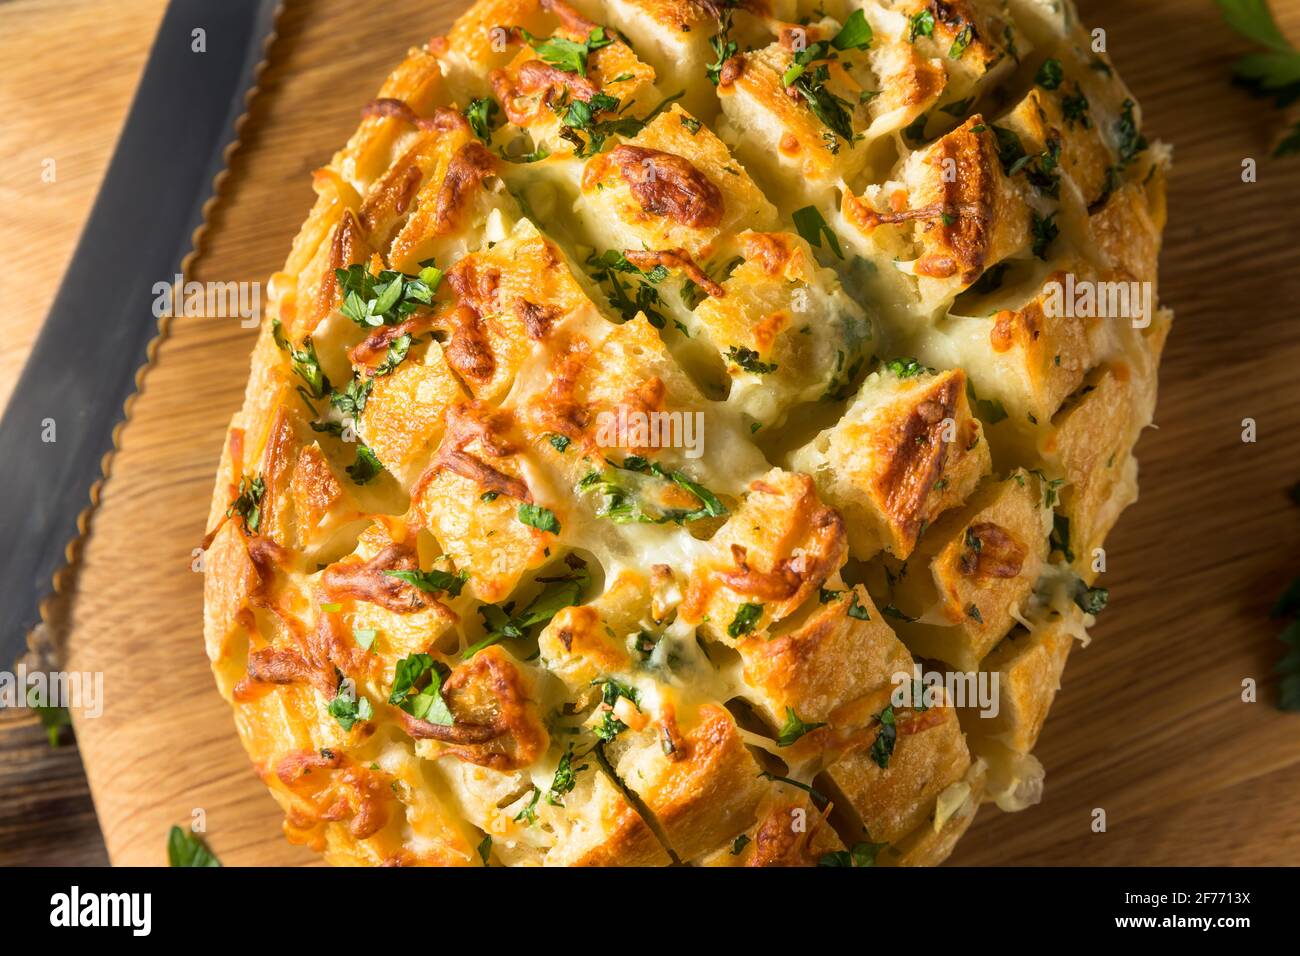 Homemade Cheesy Pull Apart Garlic Bread with Parsley Stock Photo